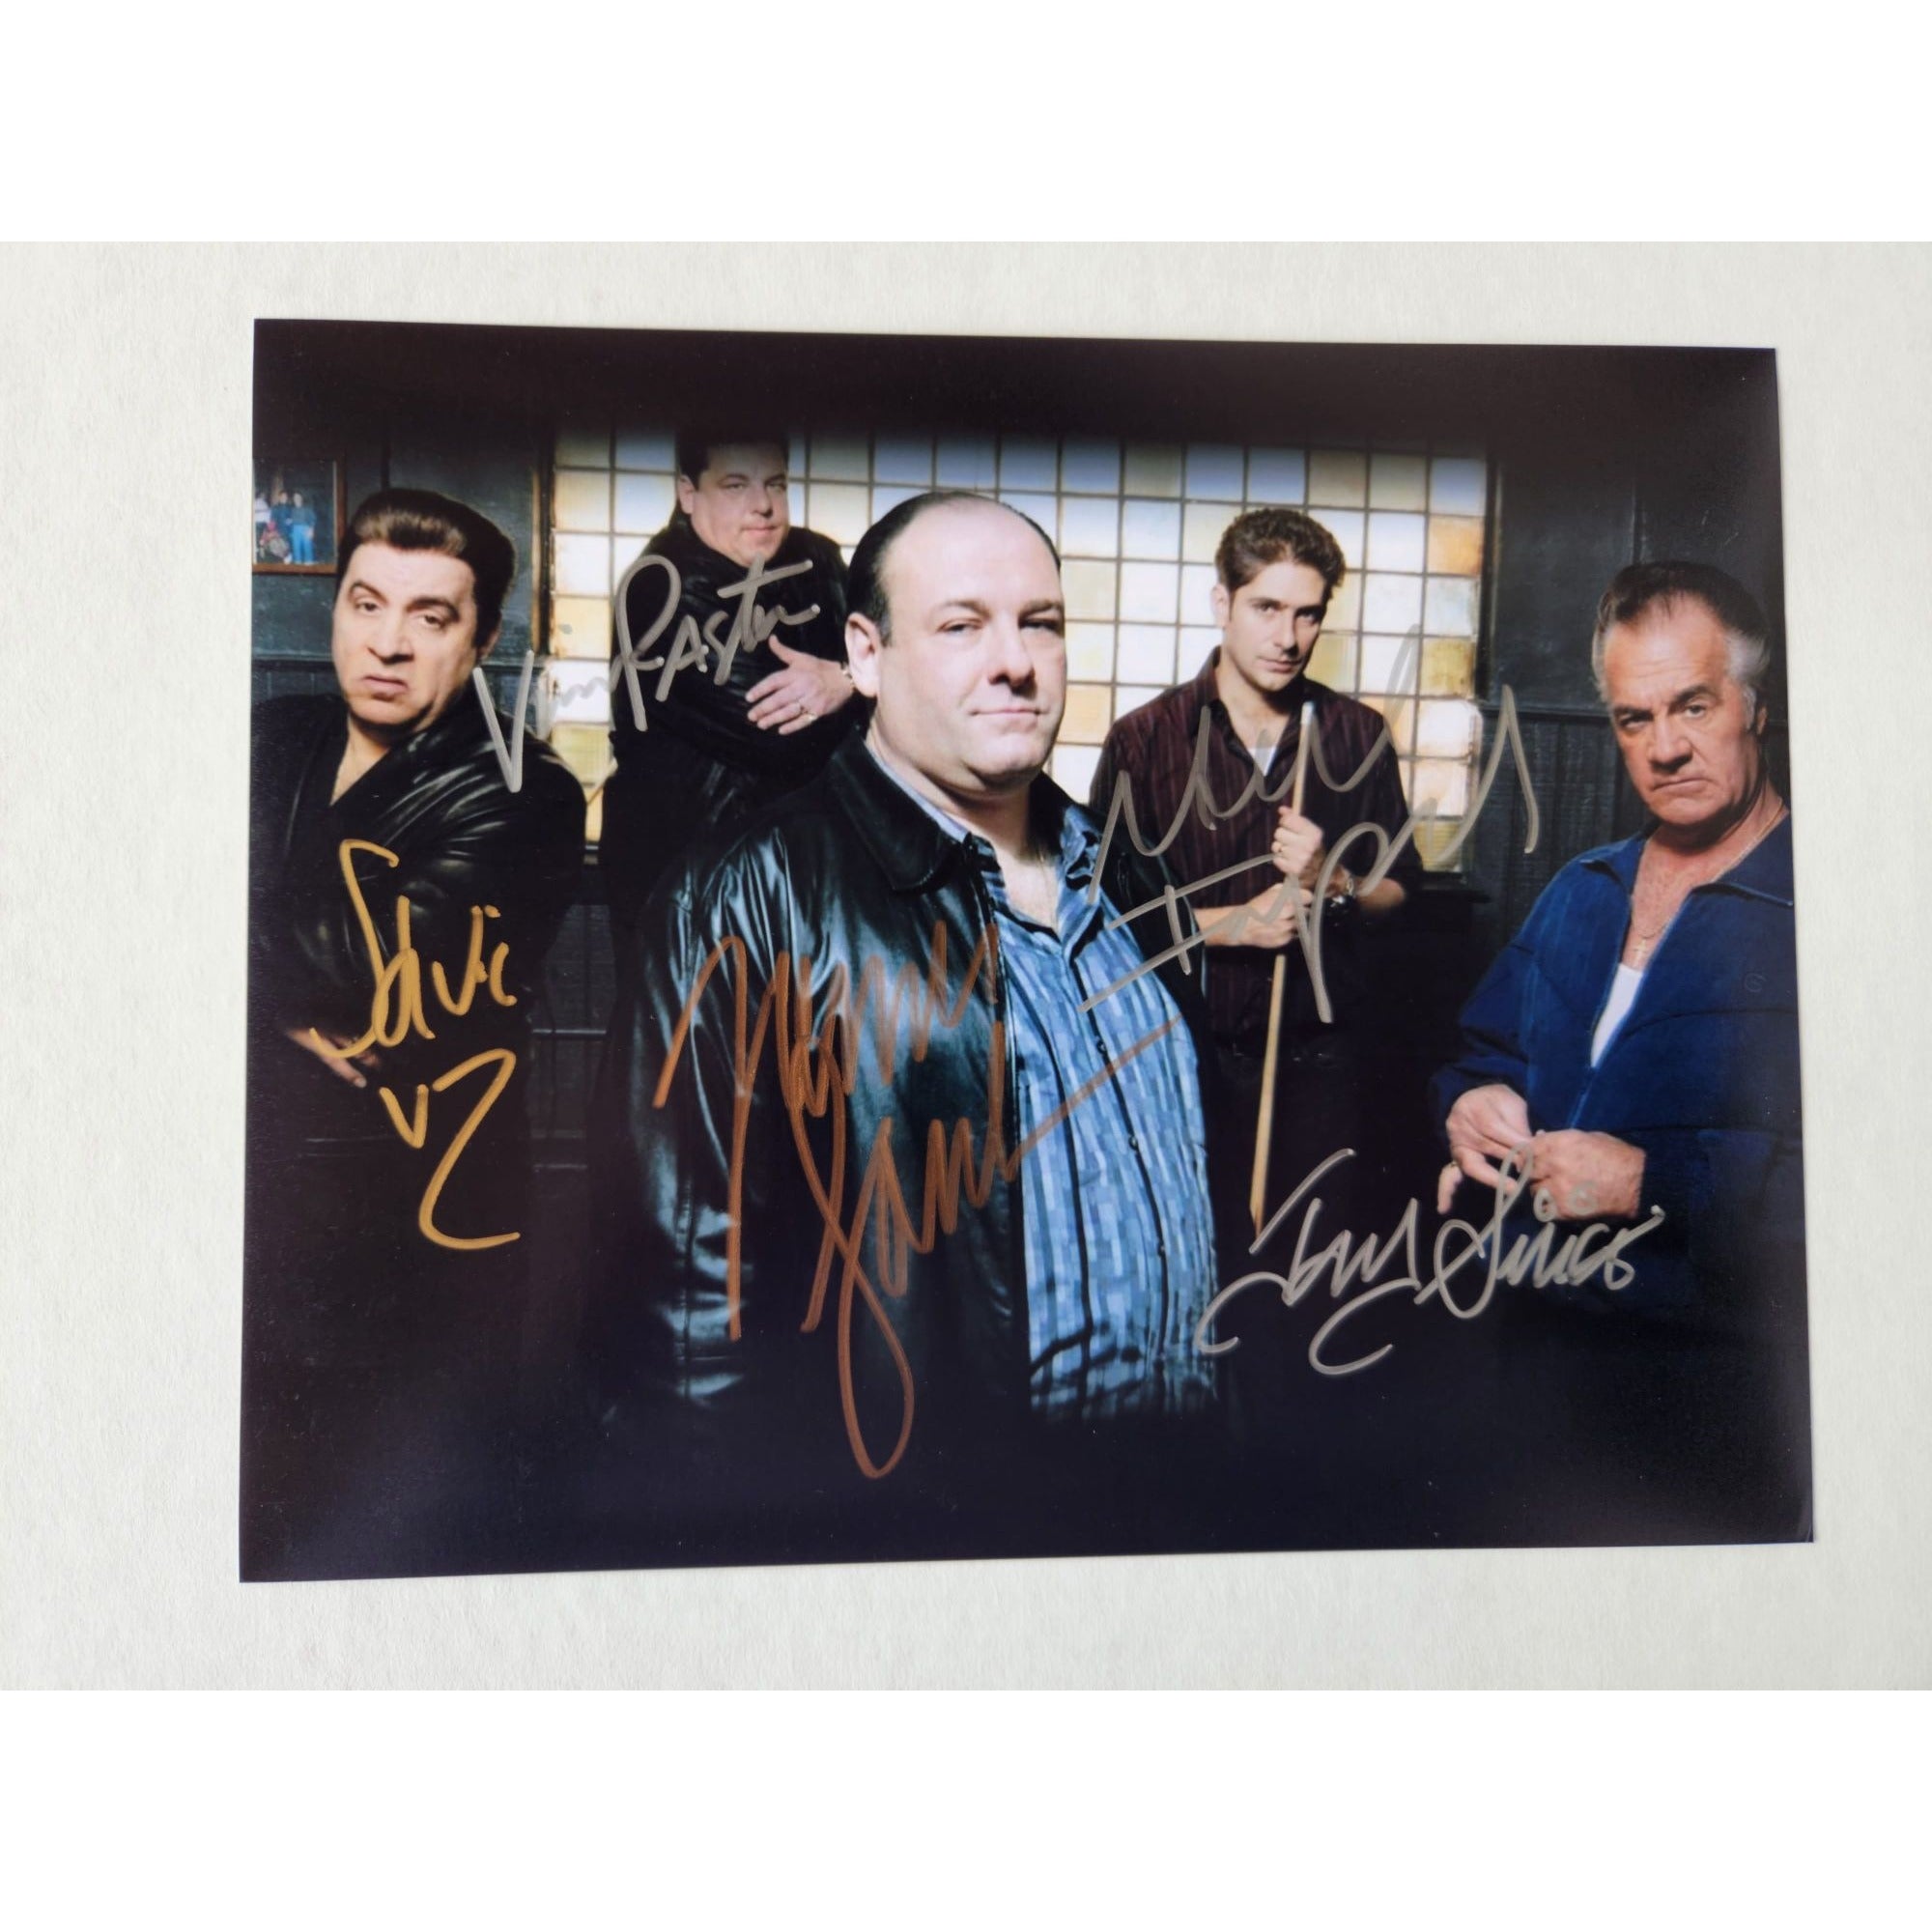 The Sopranos James Gandolfini Vinny Pastore Steve VanZandt Michael Imperioli Tony Sirico 8x10 photo signed with proof